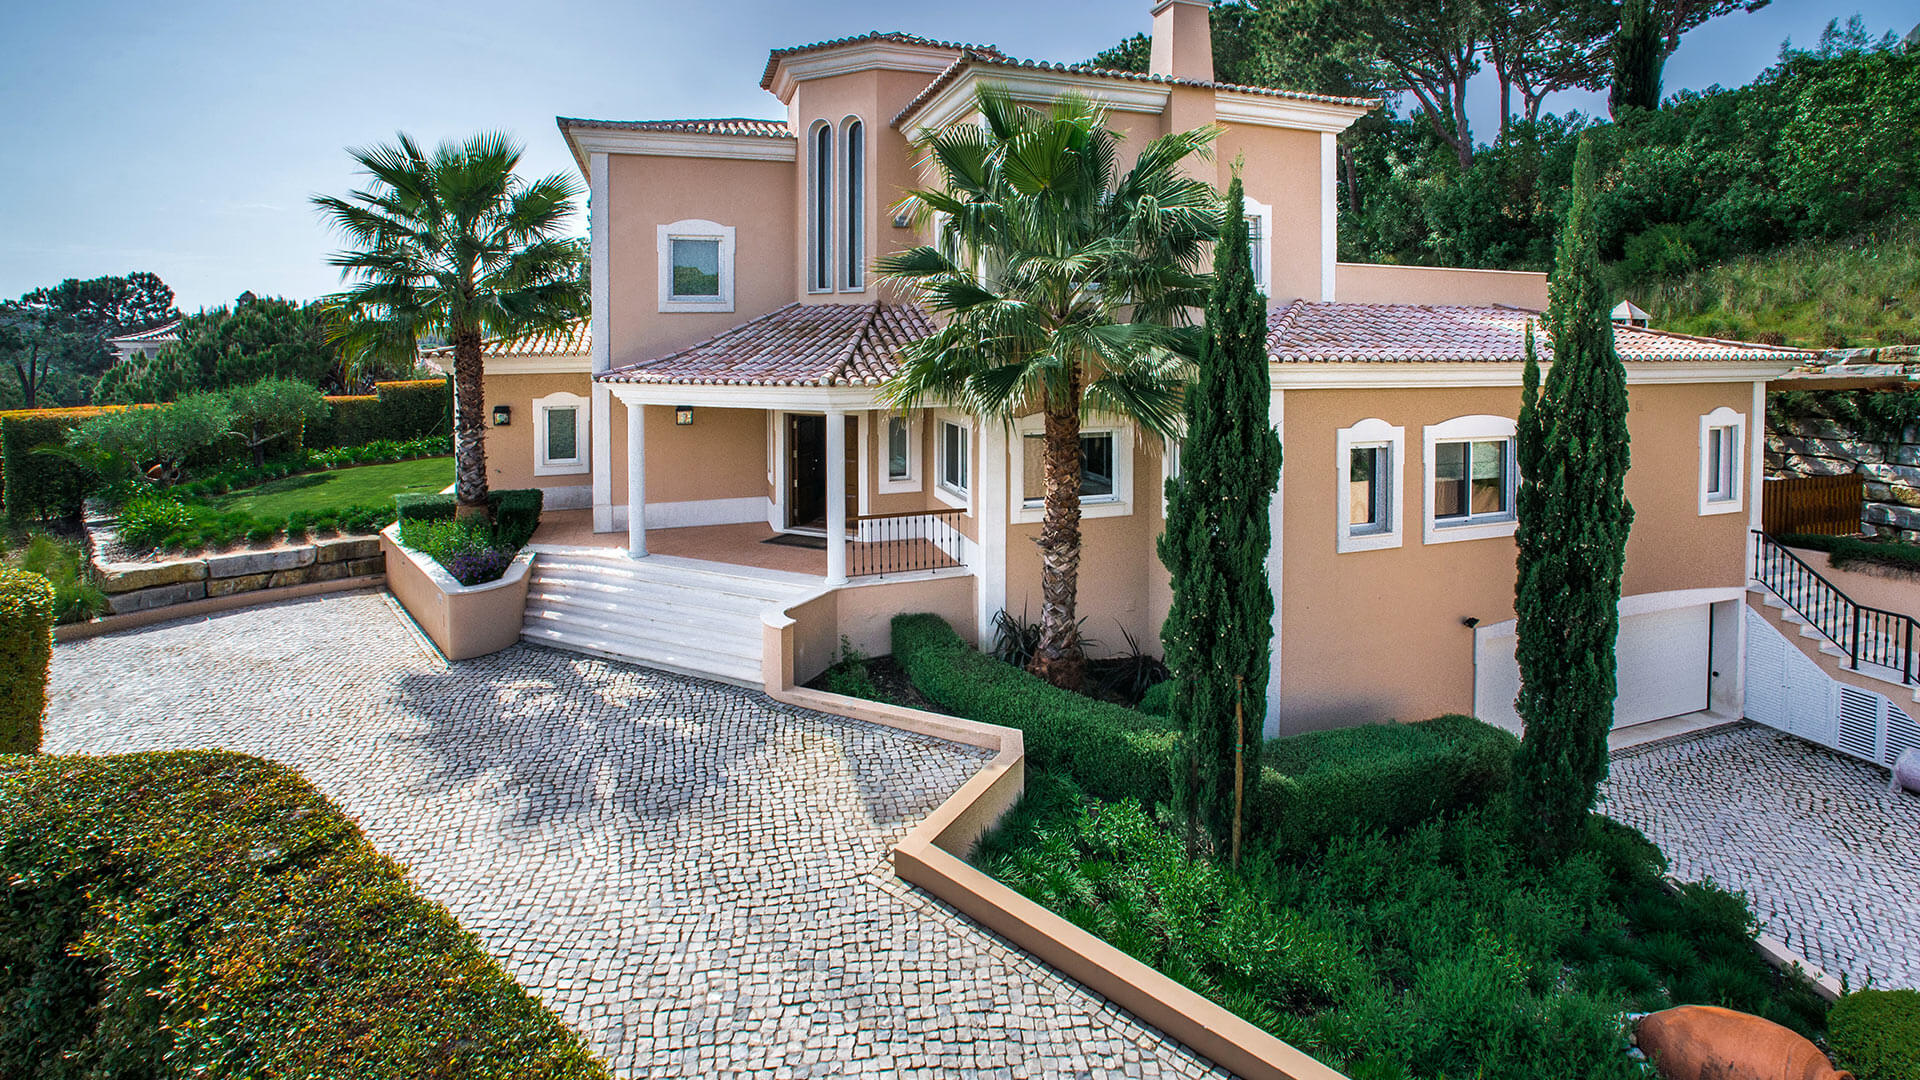 Villa Villa Onix, Ferienvilla mieten Algarve